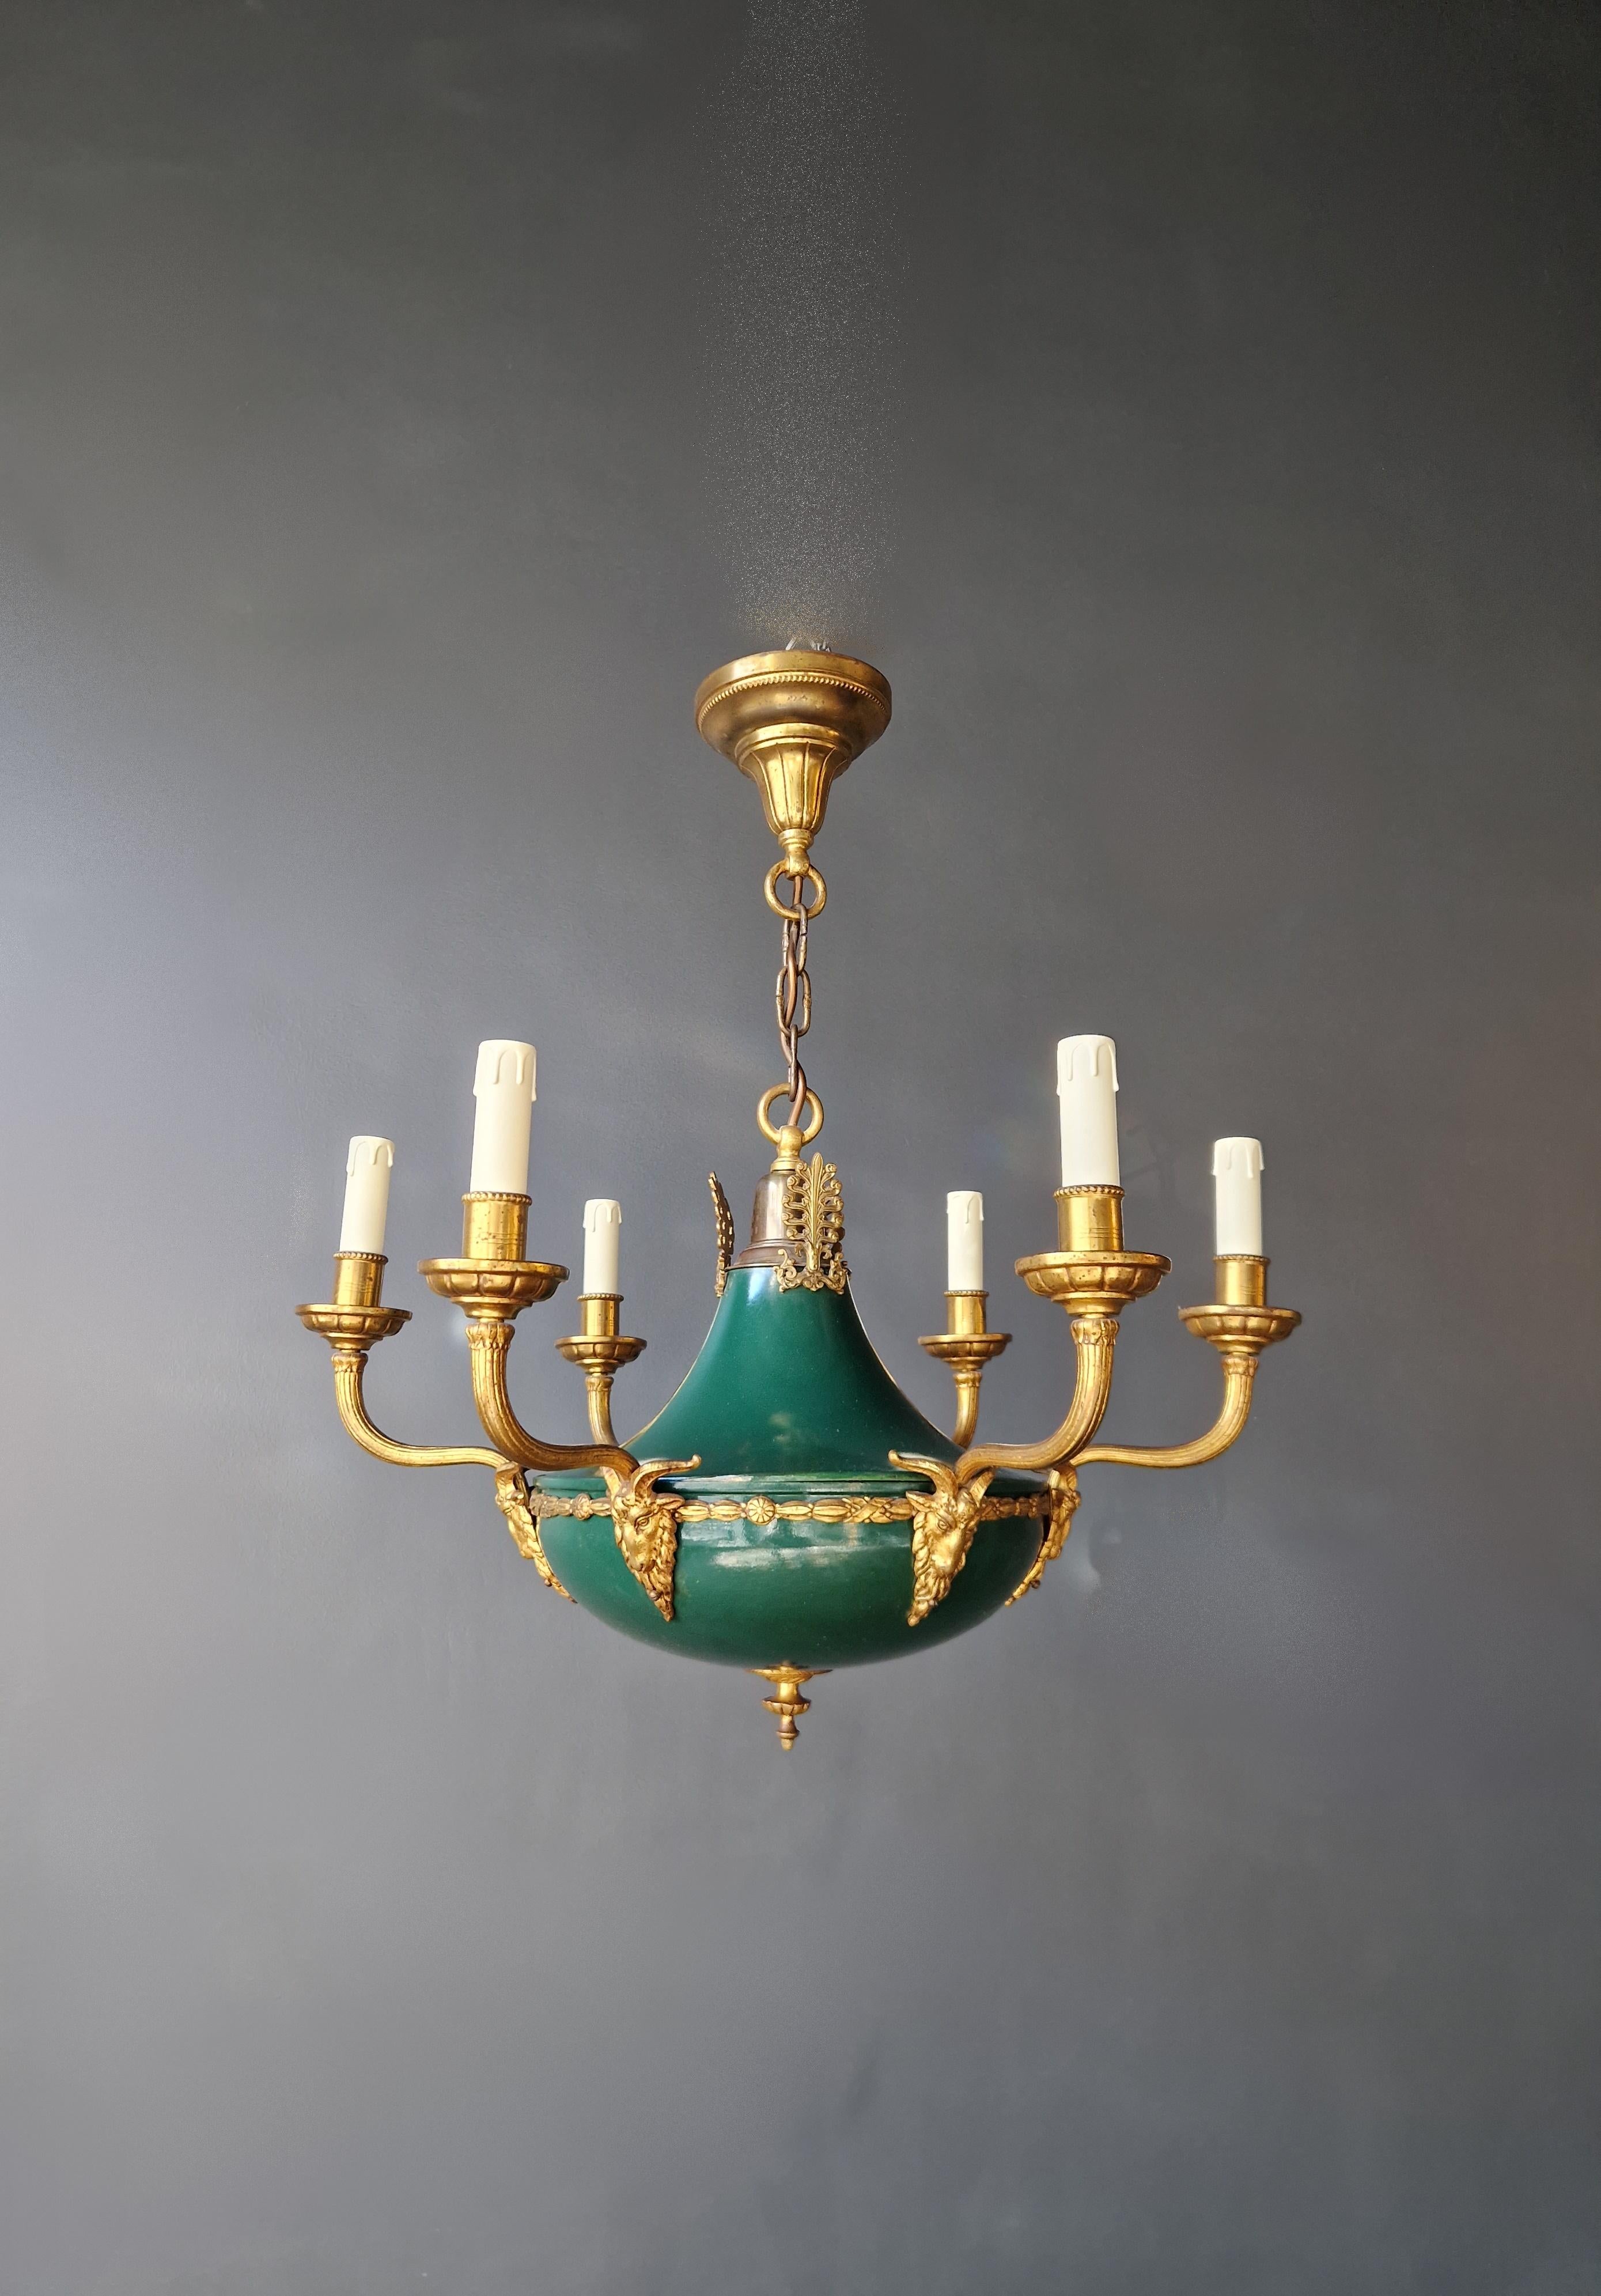 Vergoldeter antiker Empire-Kronleuchter mit neoklassizistischer Patina aus grünem Messing (Art nouveau) im Angebot